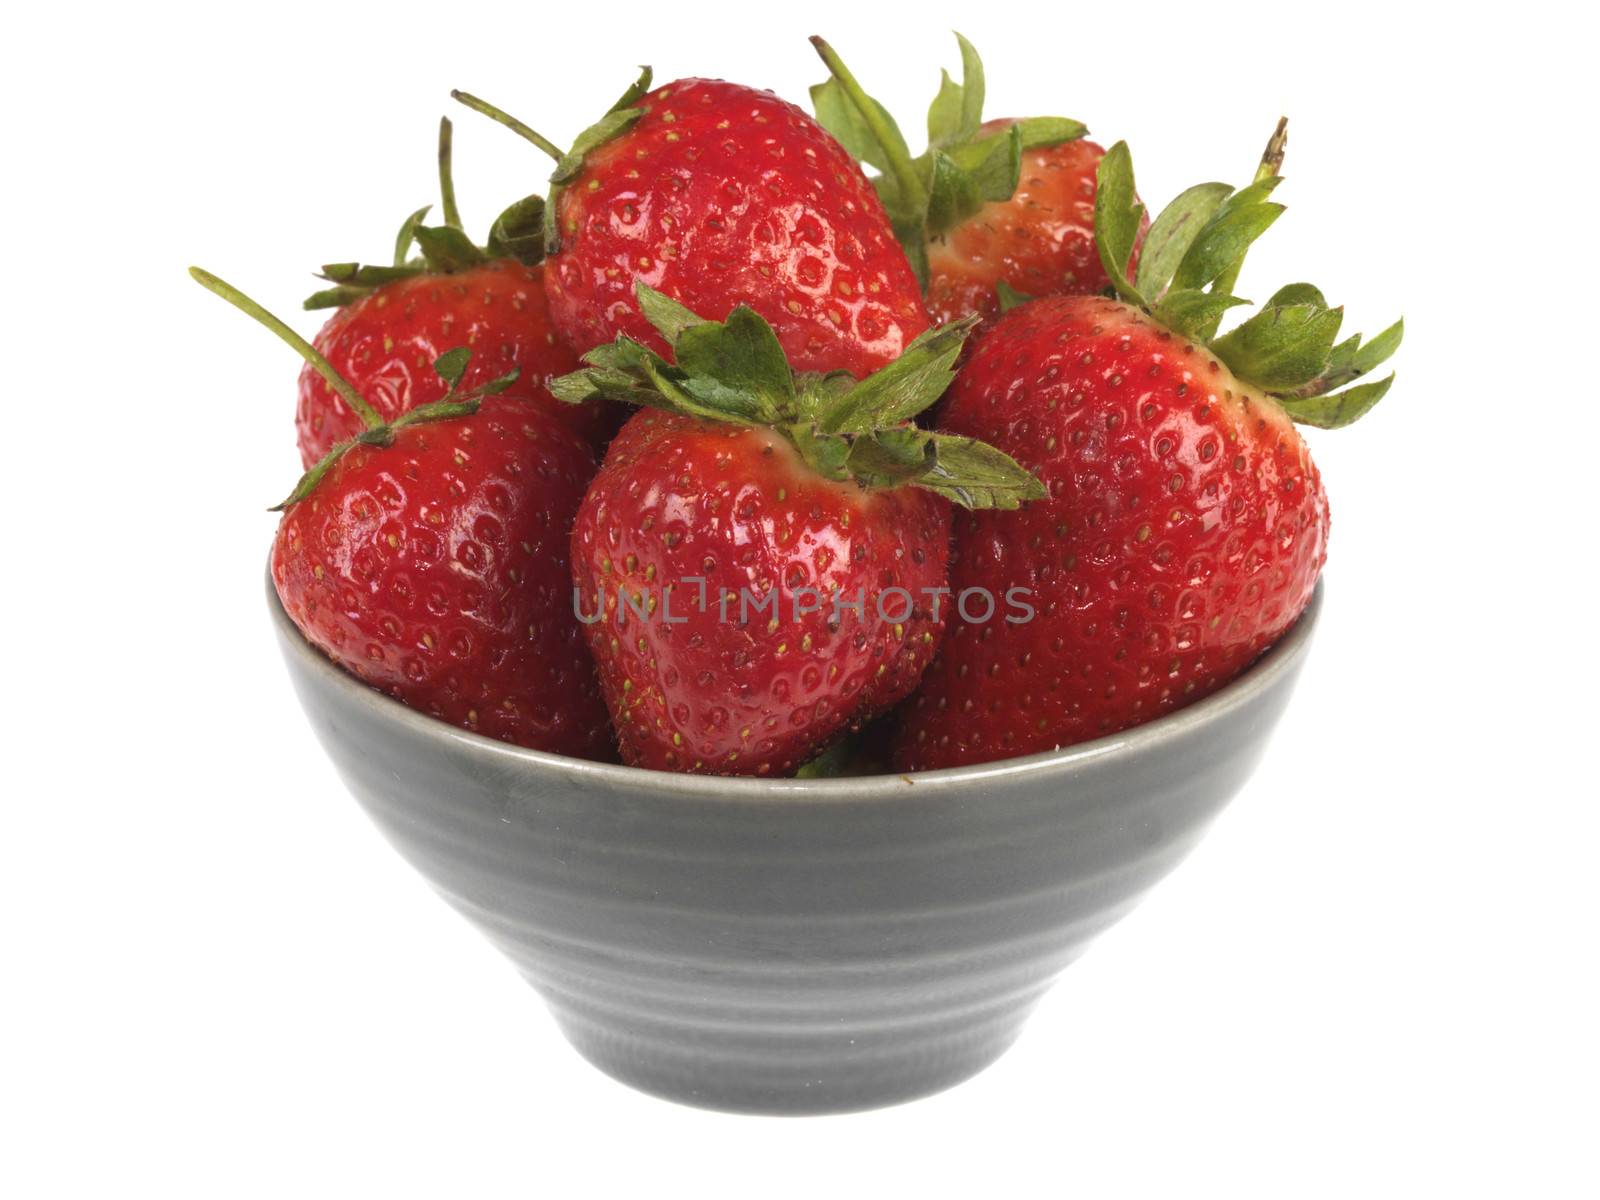 Fresh Strawberries by Whiteboxmedia